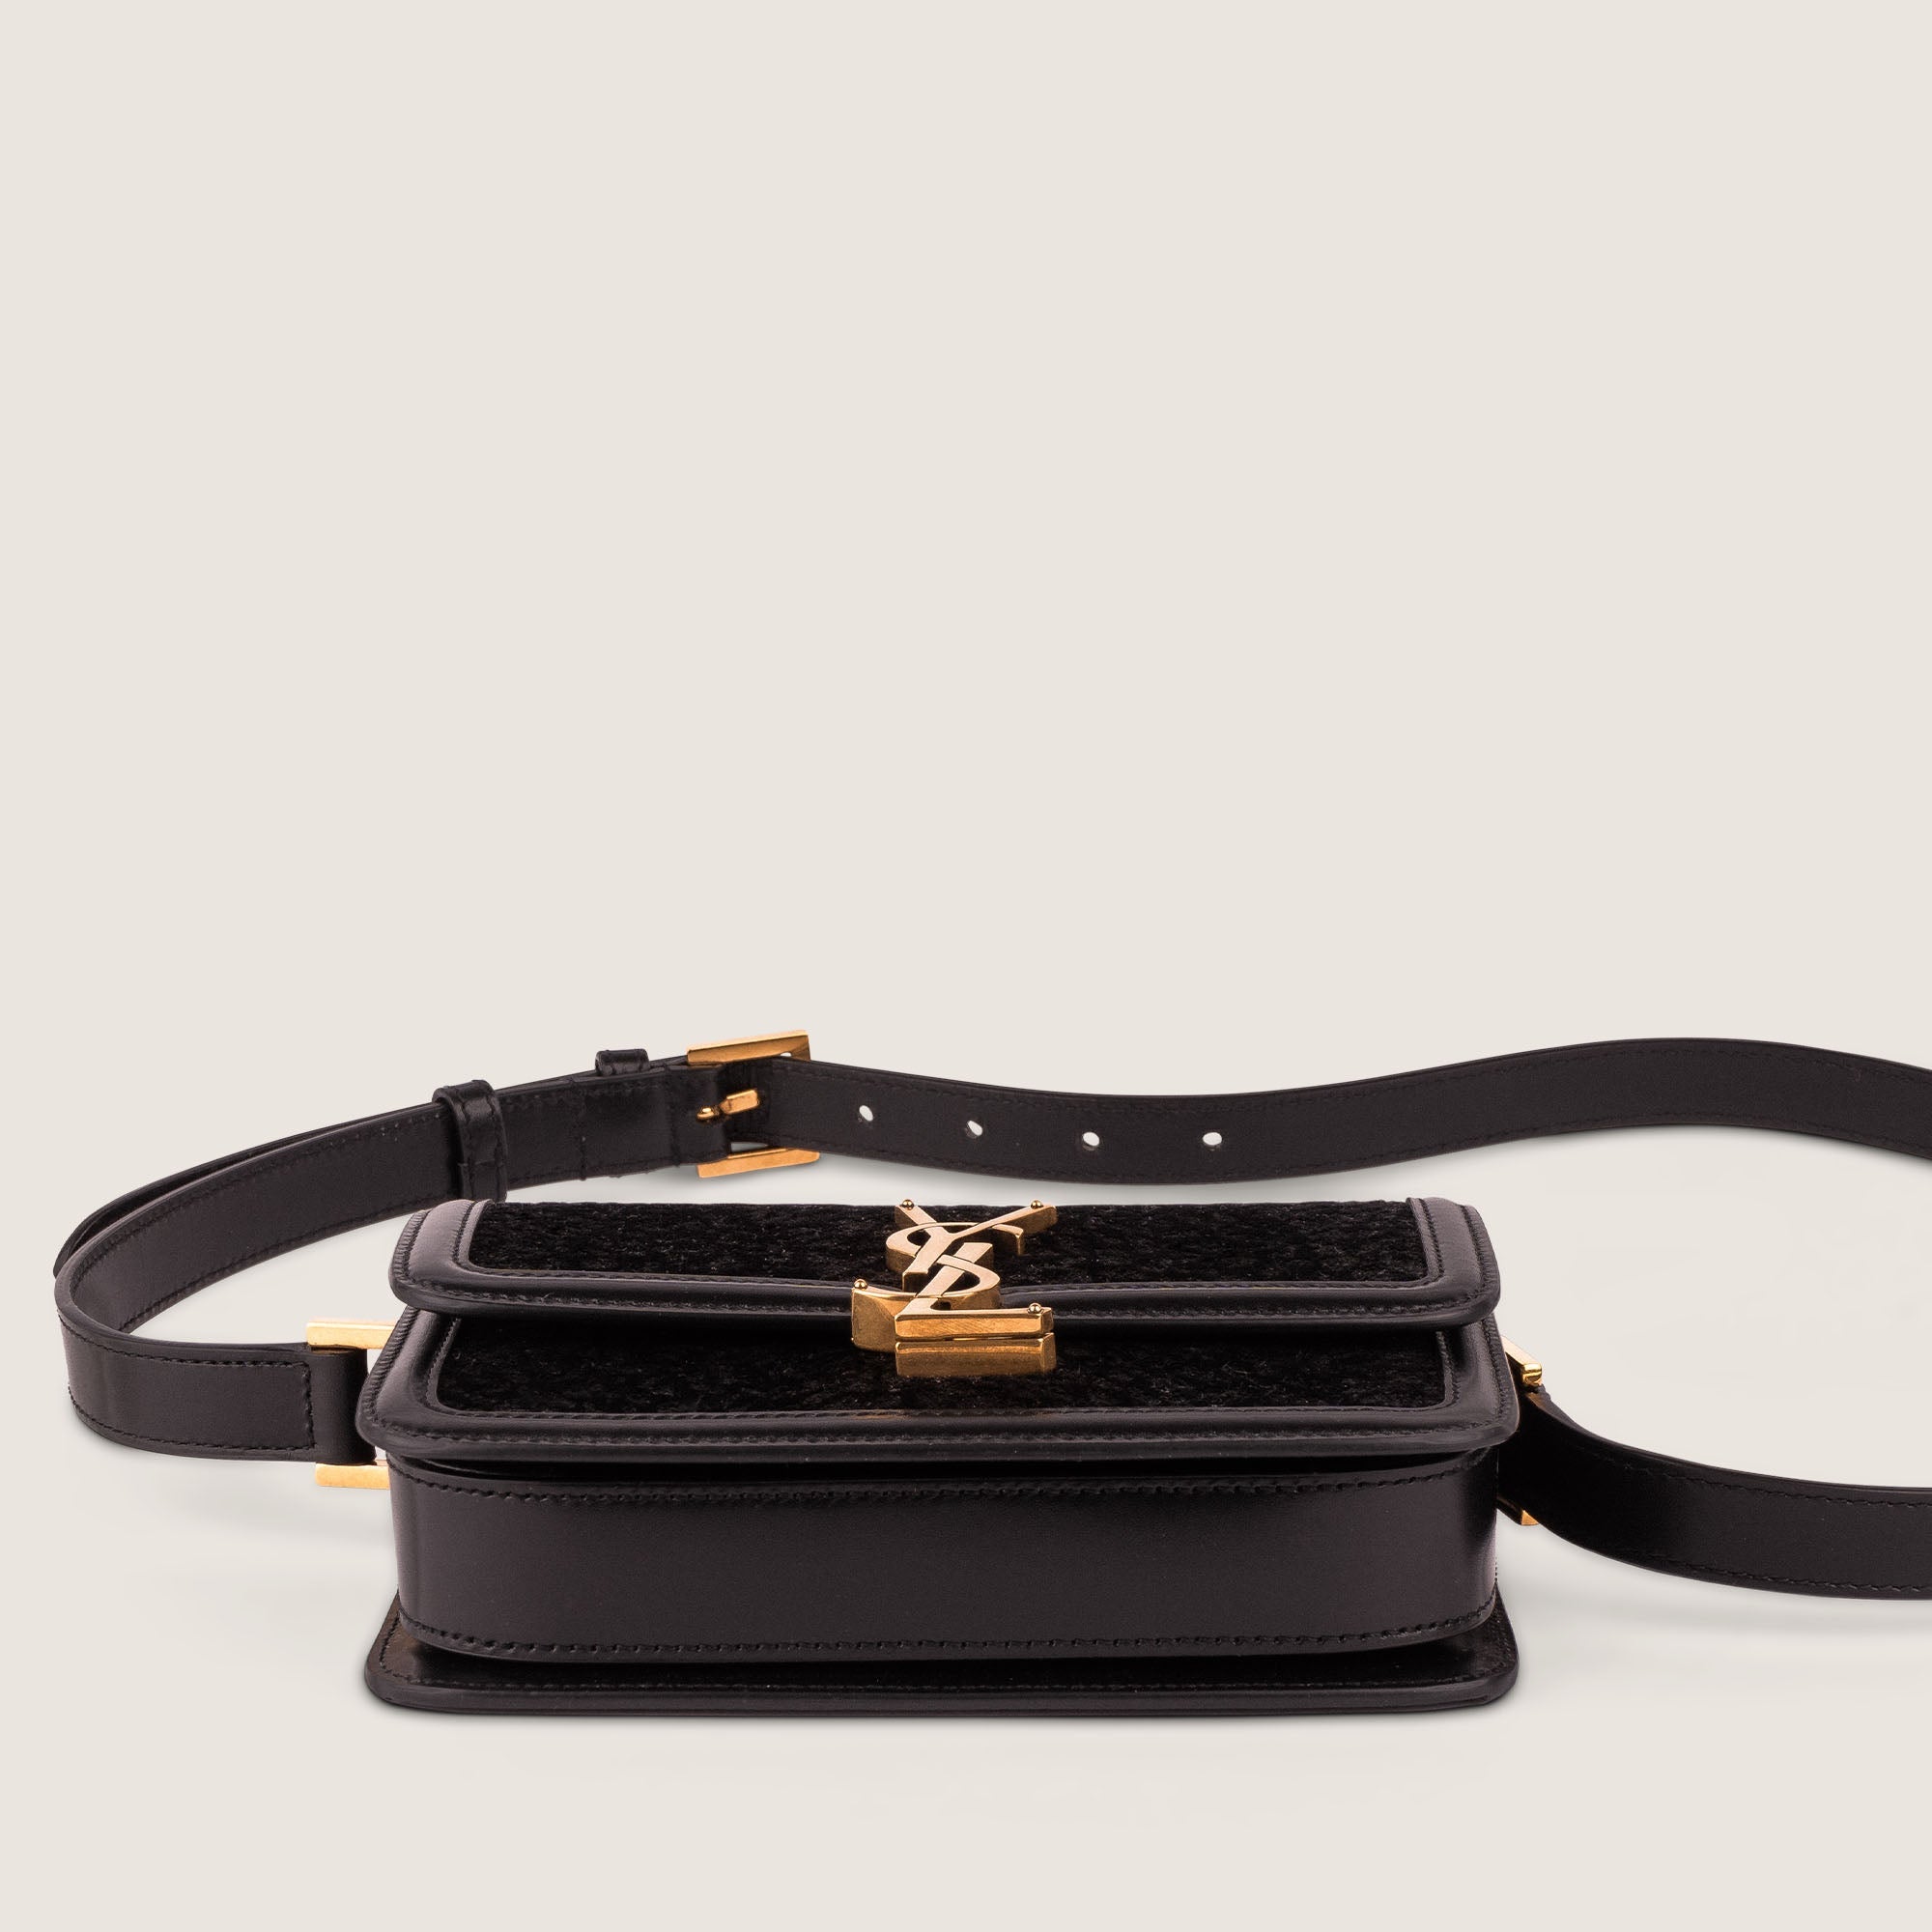 Solferino Small Satchel Bag - SAINT LAURENT - Affordable Luxury image